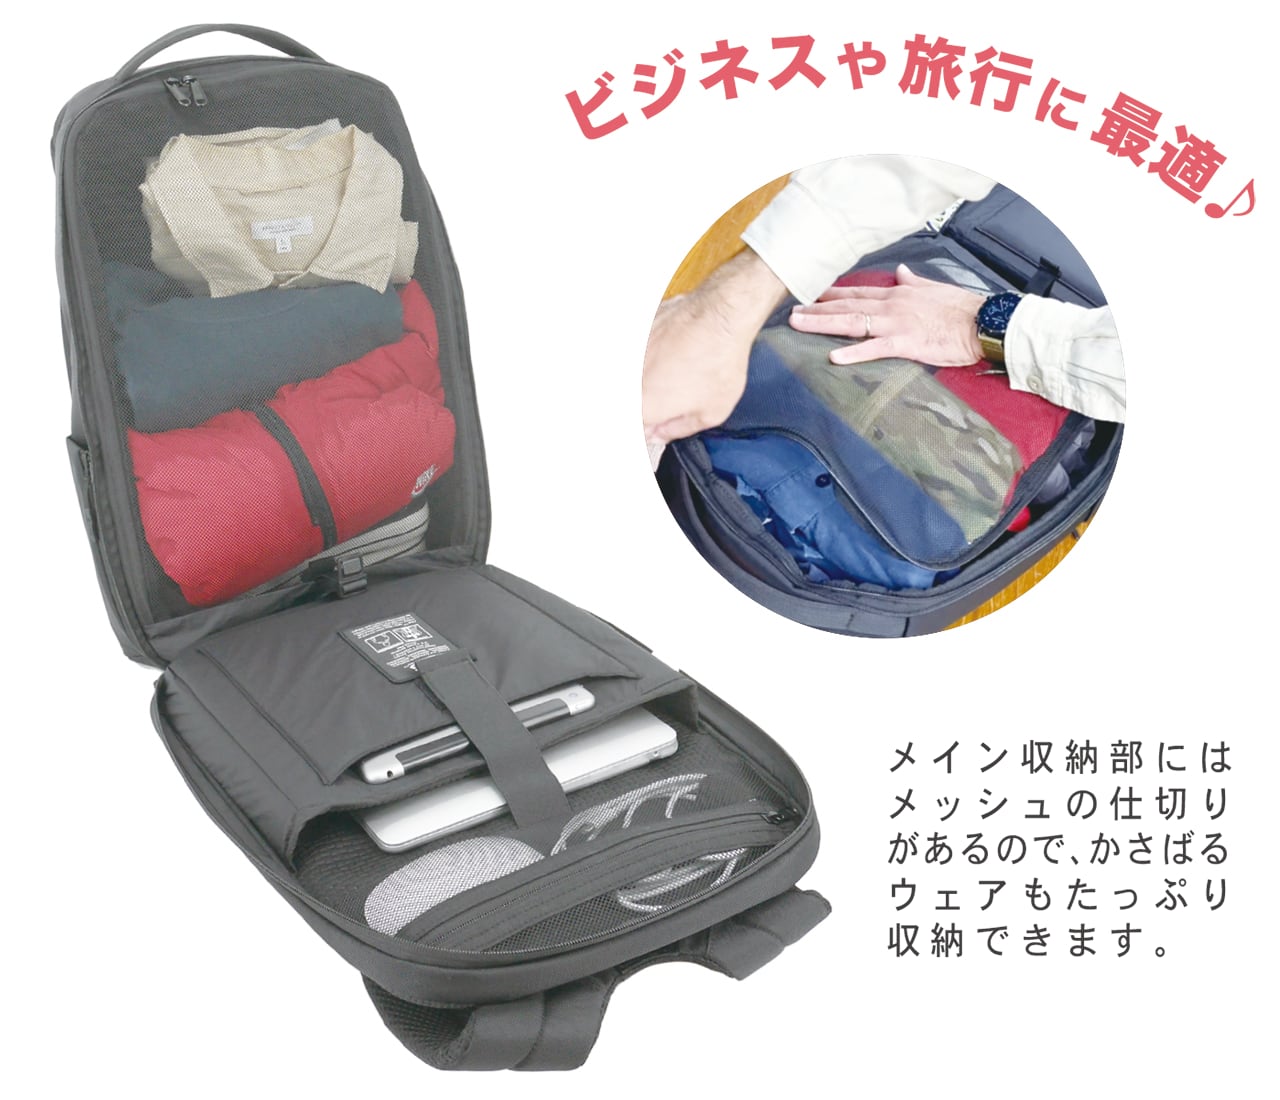 【2week sale】【重力40%カット機能】BATEN TRAVEL リュック メンズ サスペンション機能付き 3way 2way 旅行鞄  リュックサック 軽量感バックパック